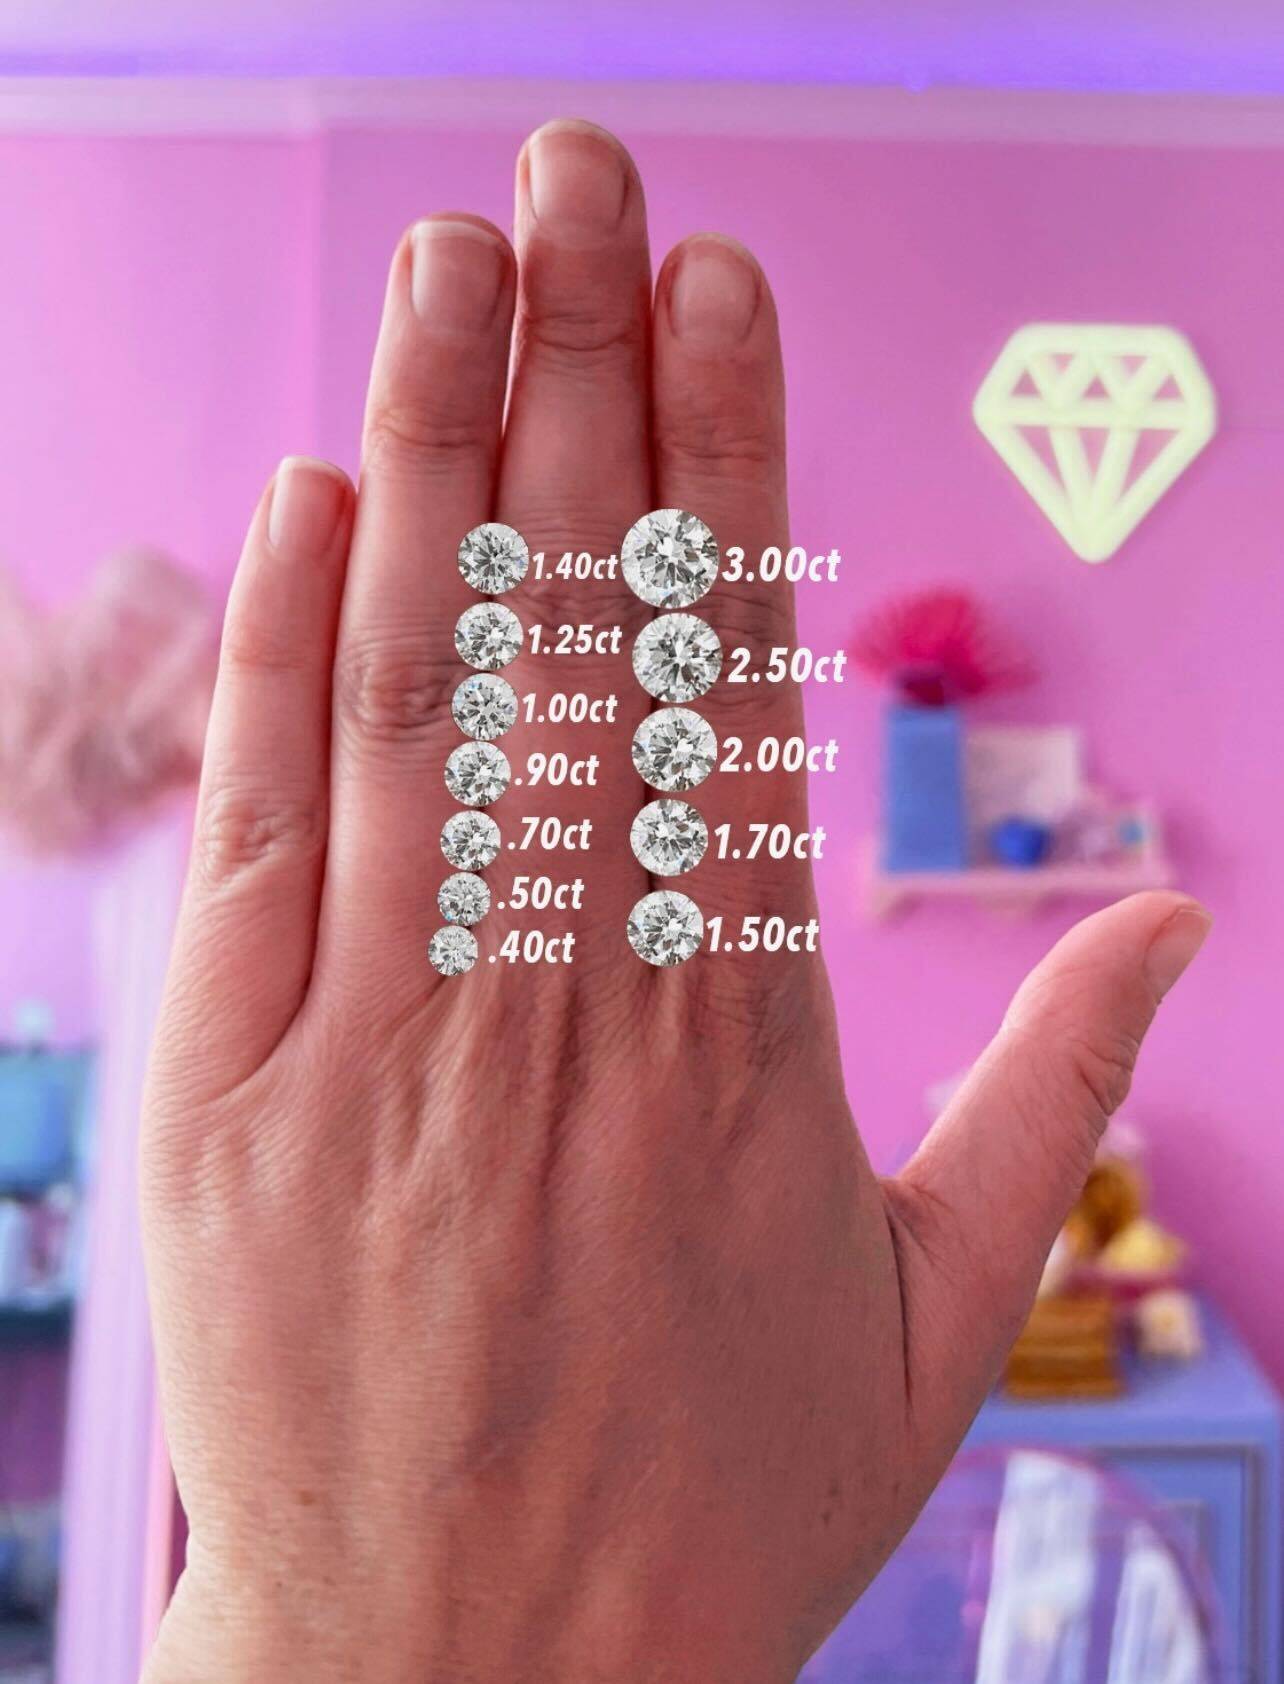 Different Diamond Carat Sizes on a Hand & Diamond Size Pro-tips